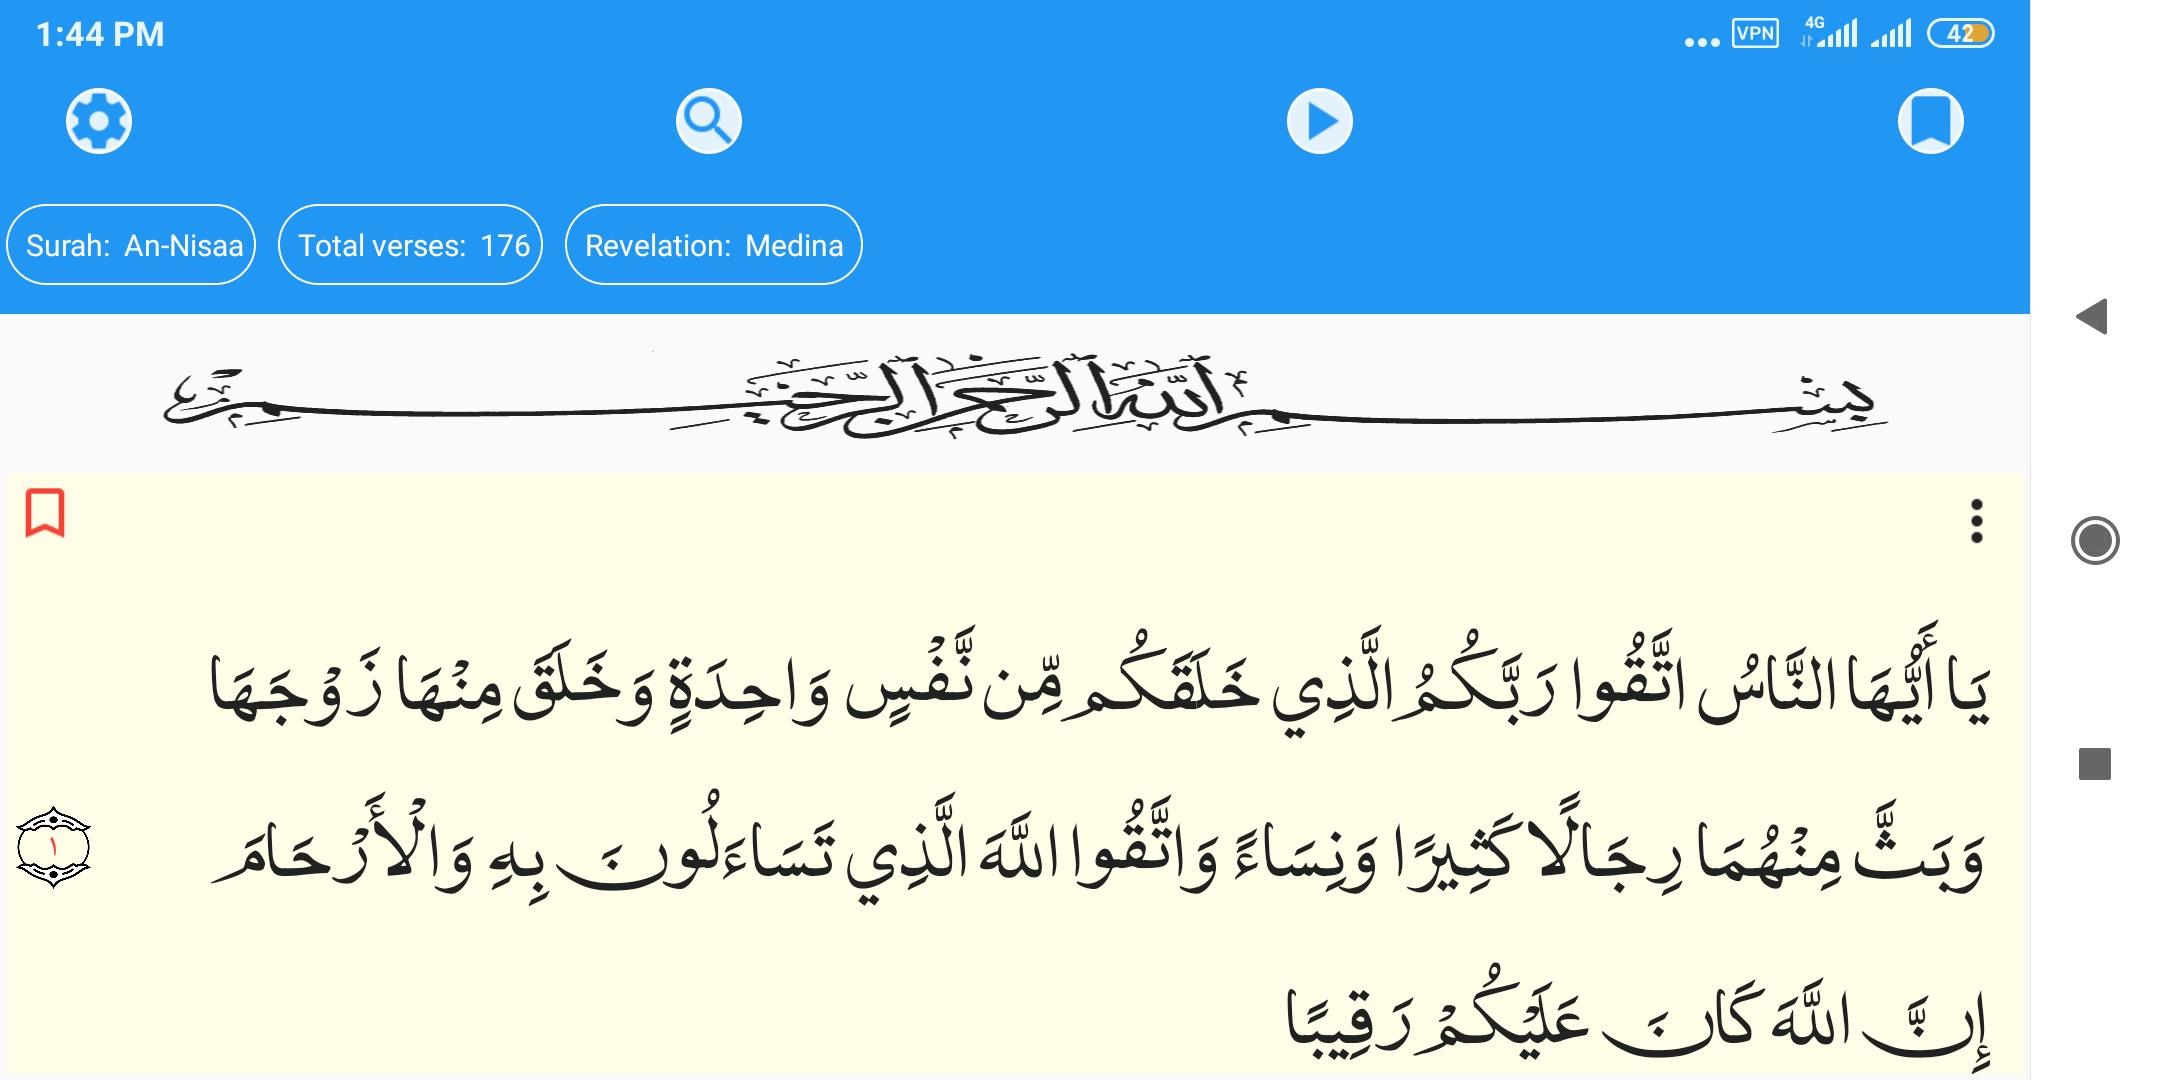 Hausa Qur'an - Qur'an with Hausa Translation 1.1 Screenshot 8